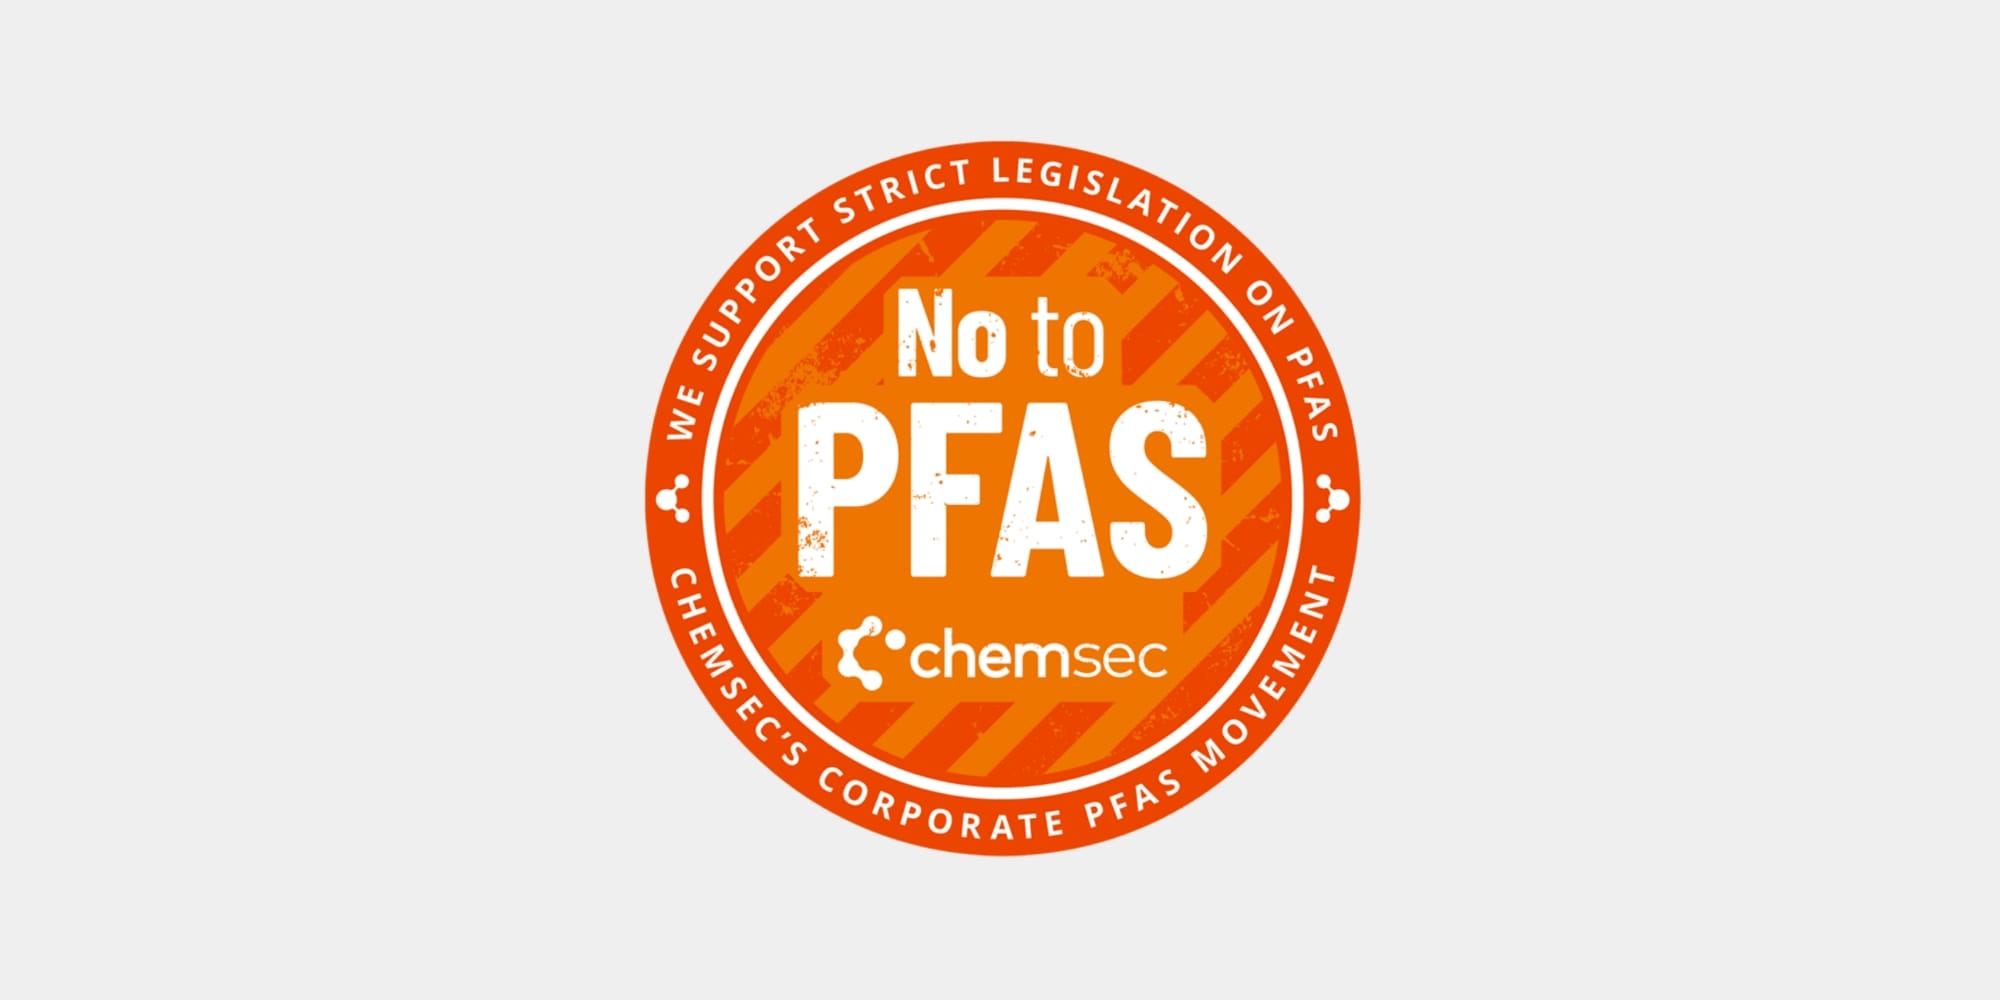 We support strict legislation on PFAS – No to PFAS